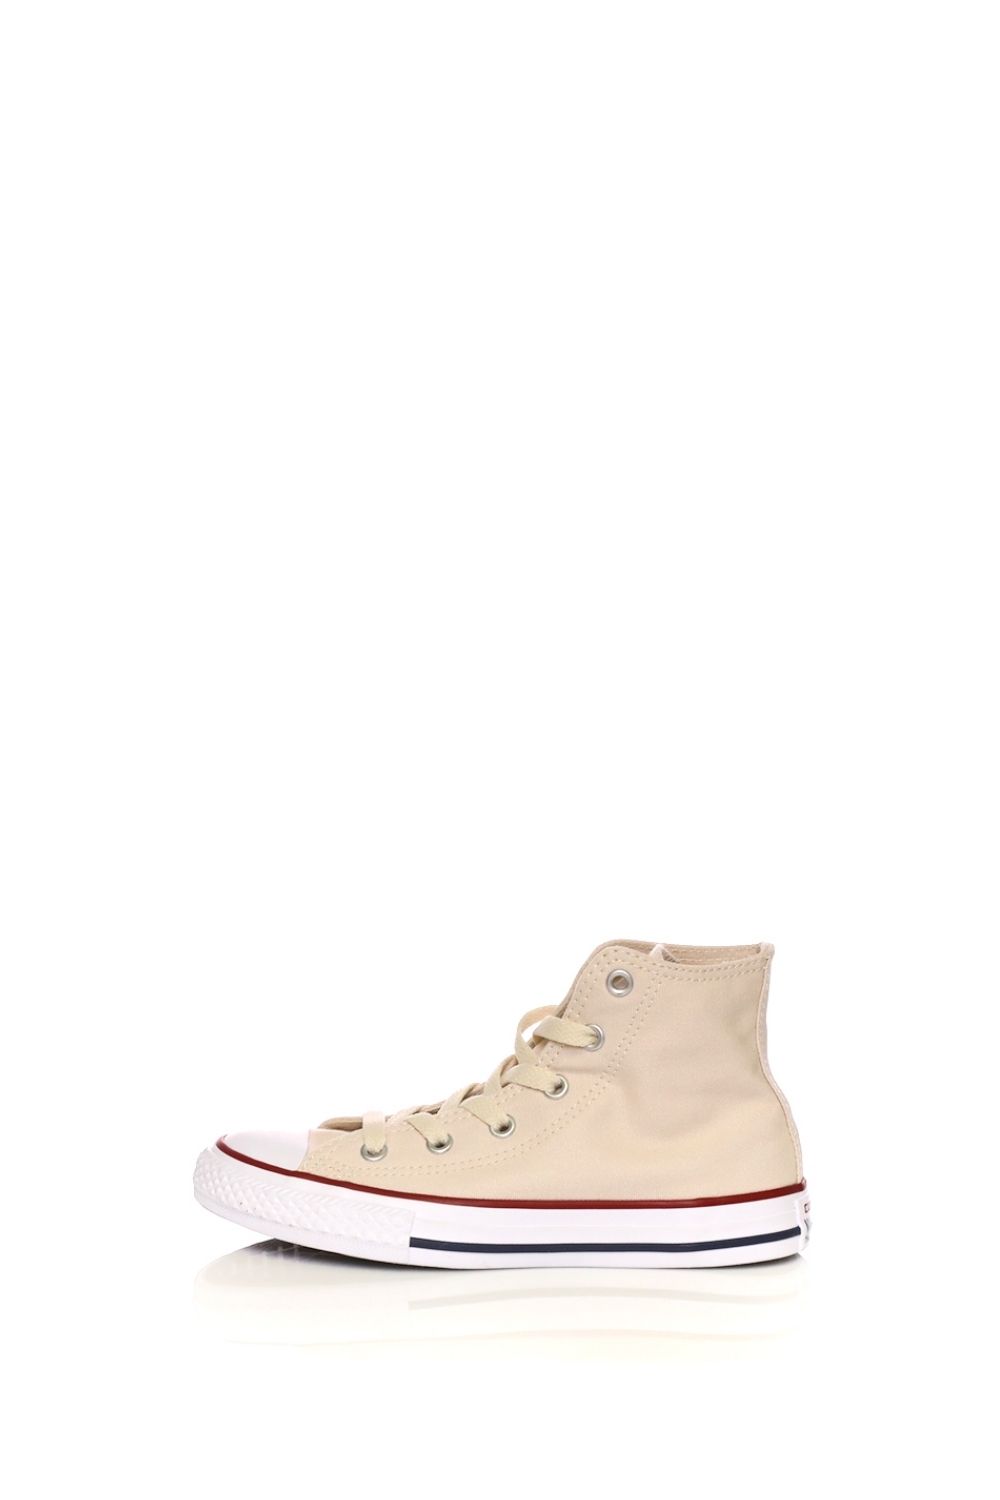 CONVERSE - Παιδικά μποτάκια Converse Chuck Taylor All Star Hi μπεζ Παιδικά/Girls/Παπούτσια/Sneakers